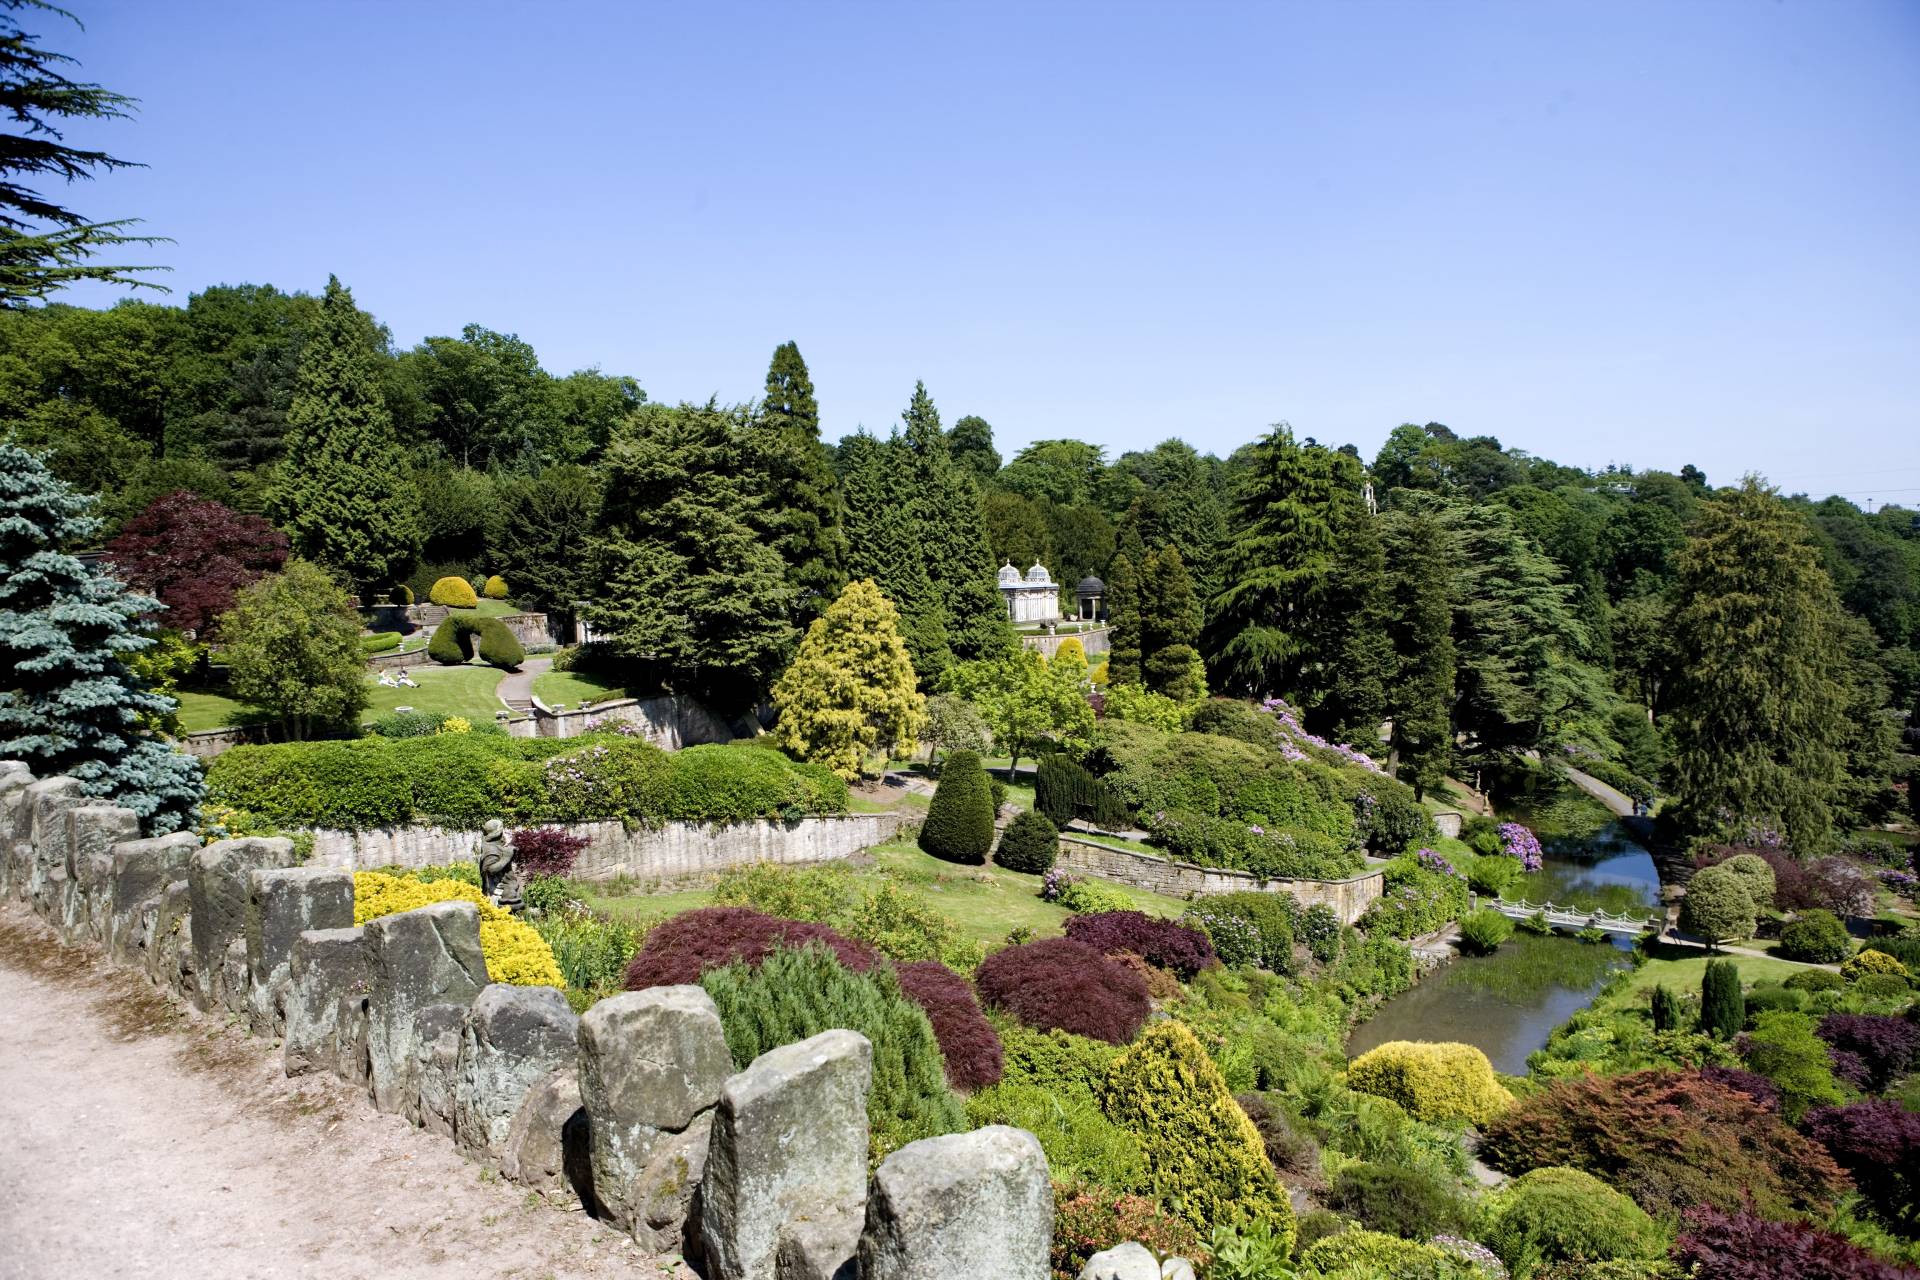 visit alton towers gardens